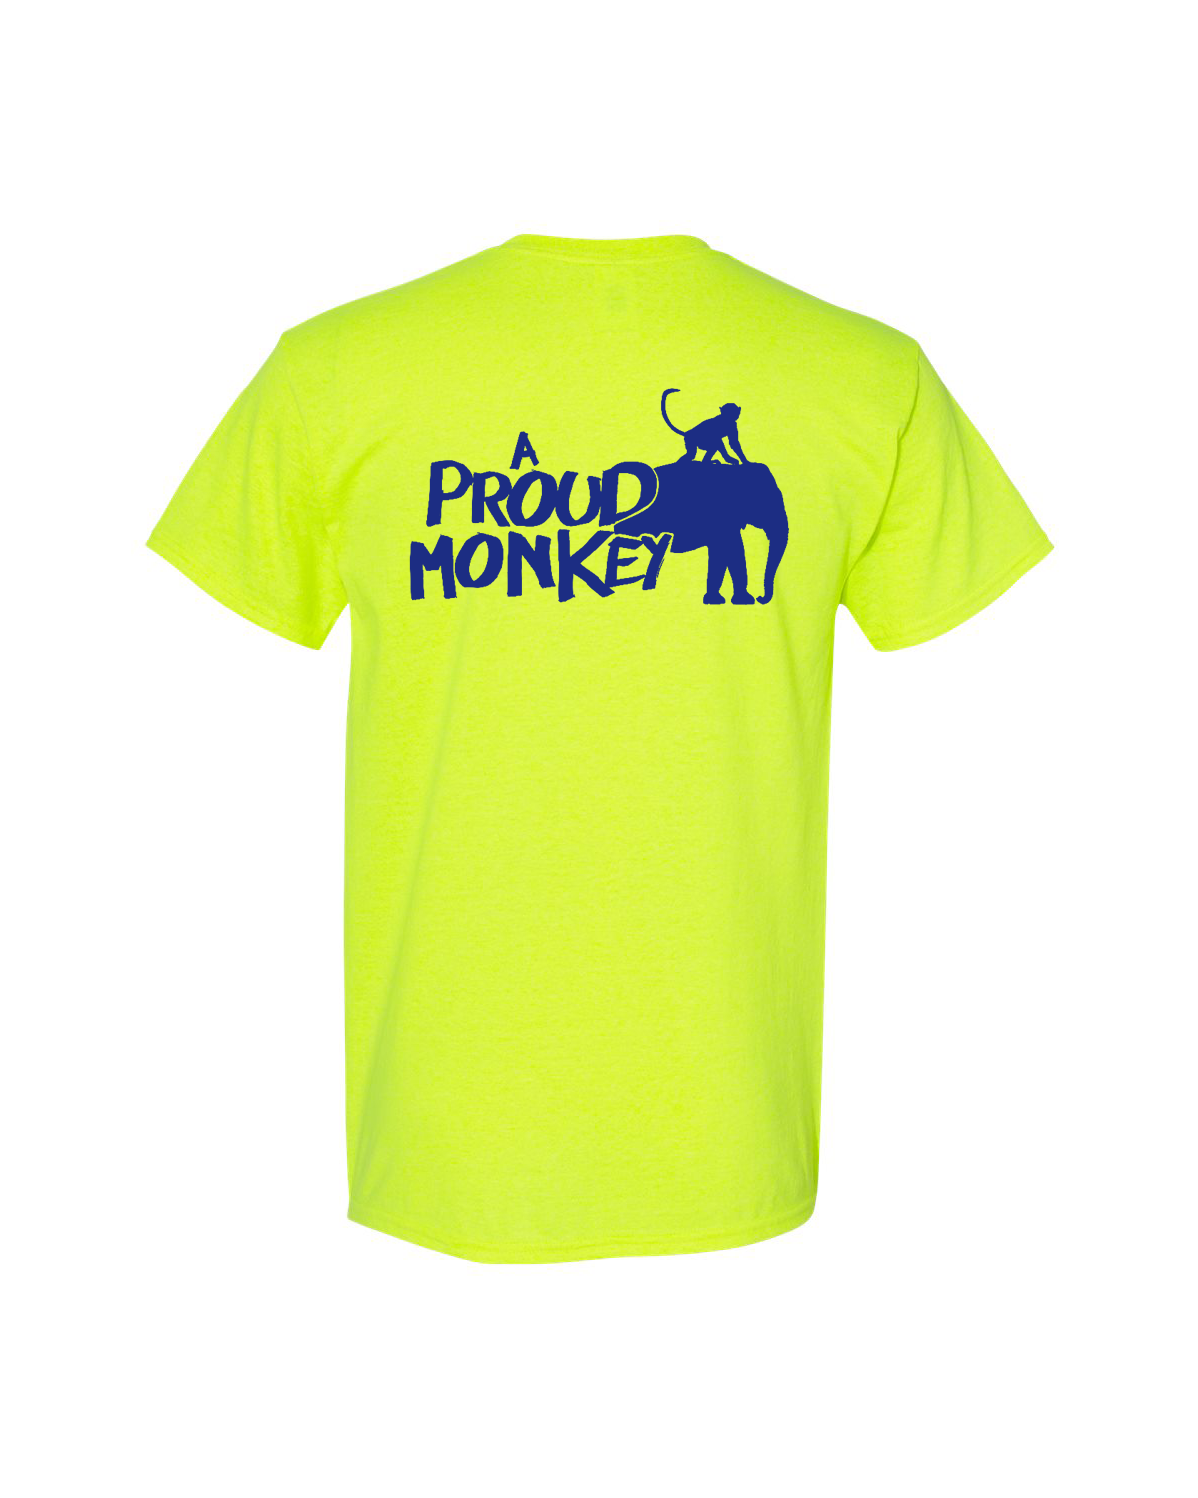 A Proud Monkey - Strobe Green T-Shirt